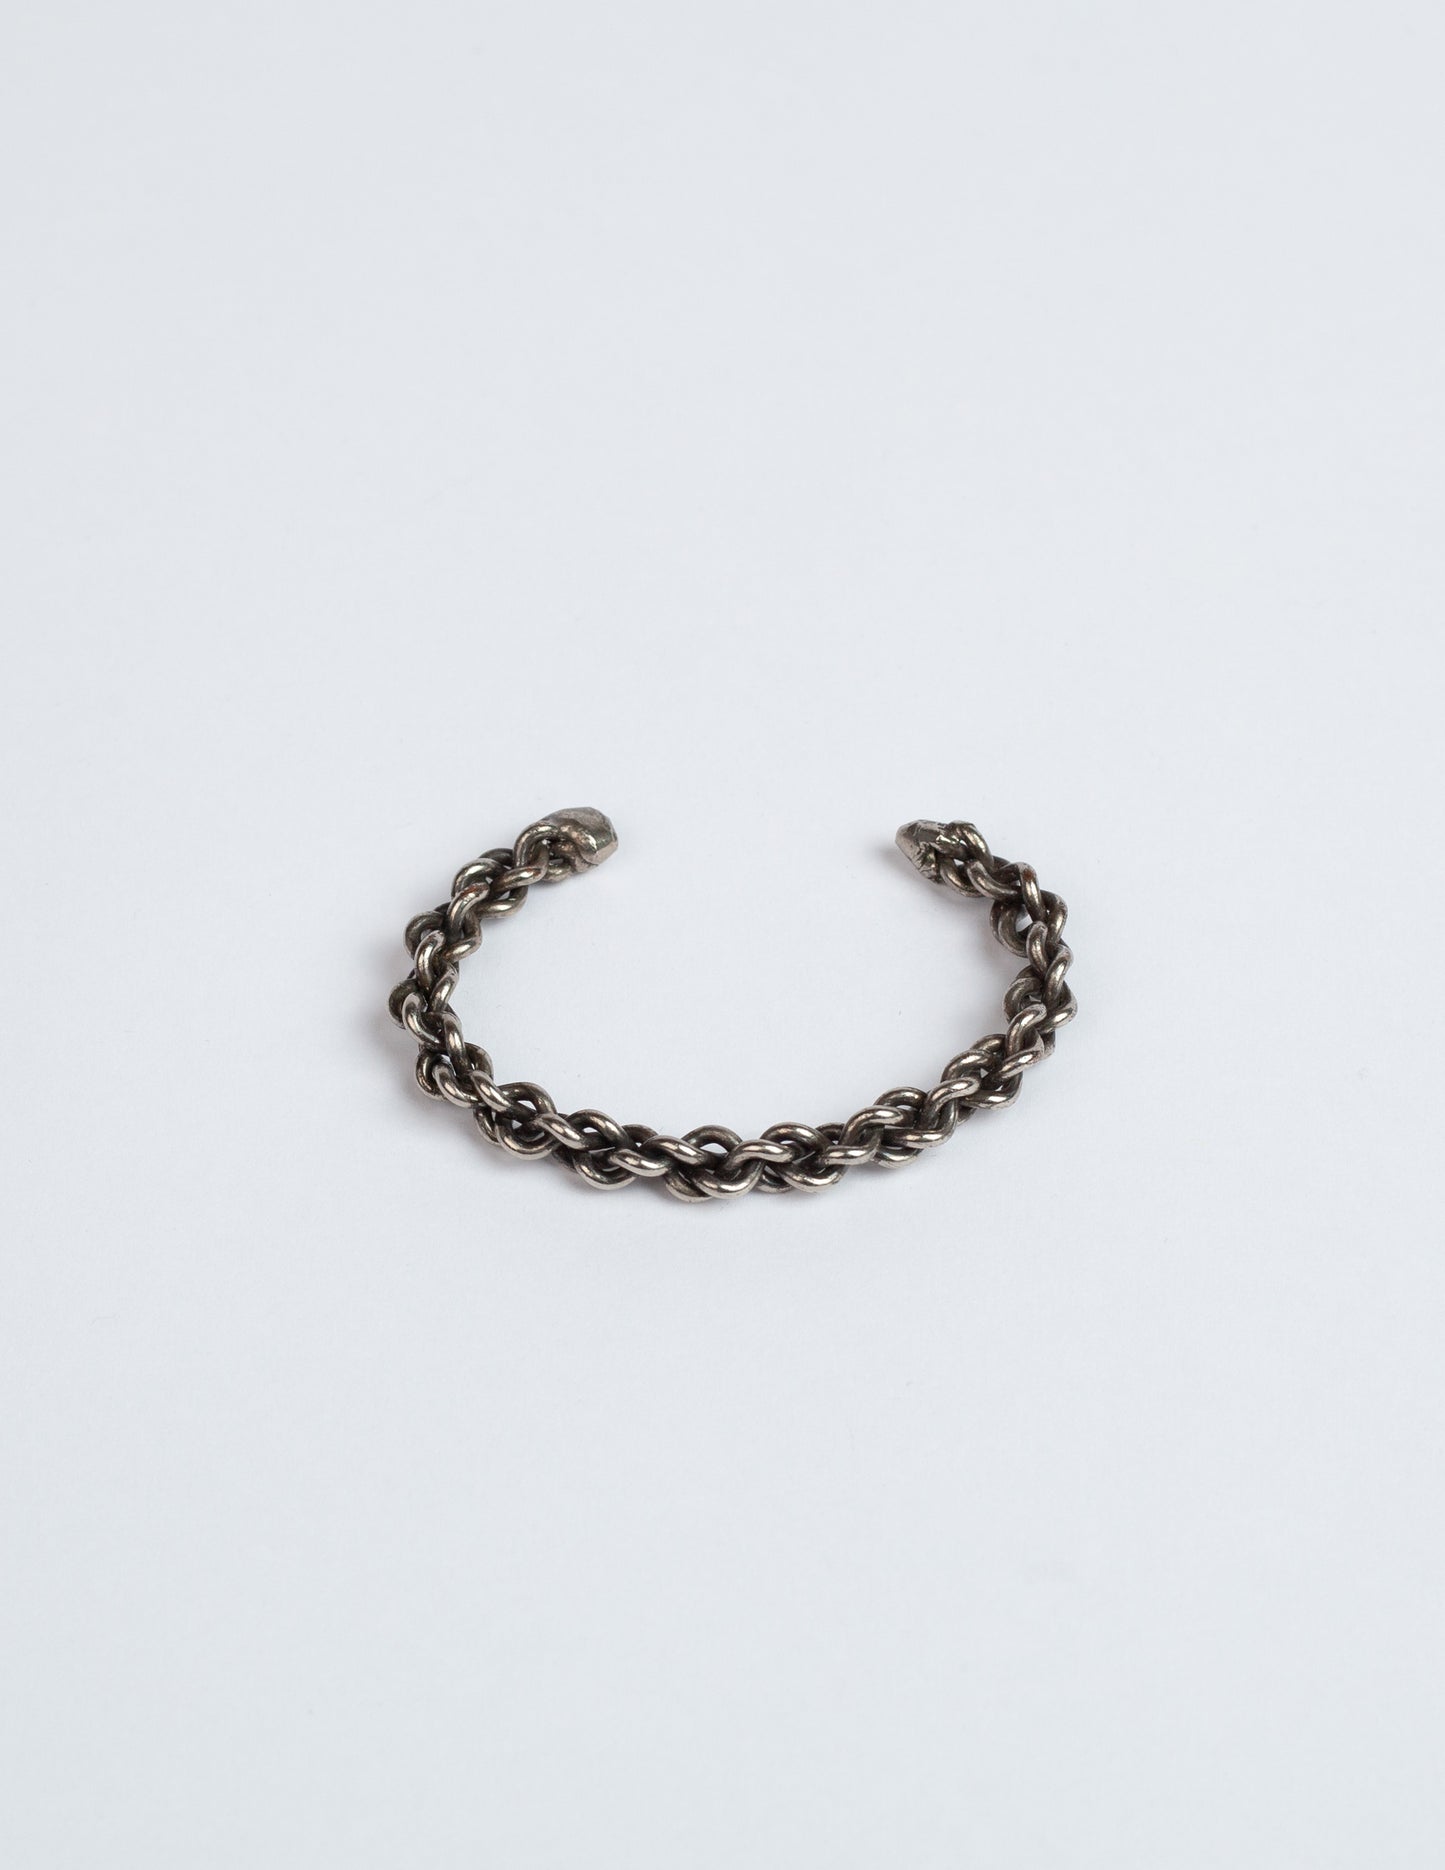 1950s Twisted Sterling Cuff Bracelet